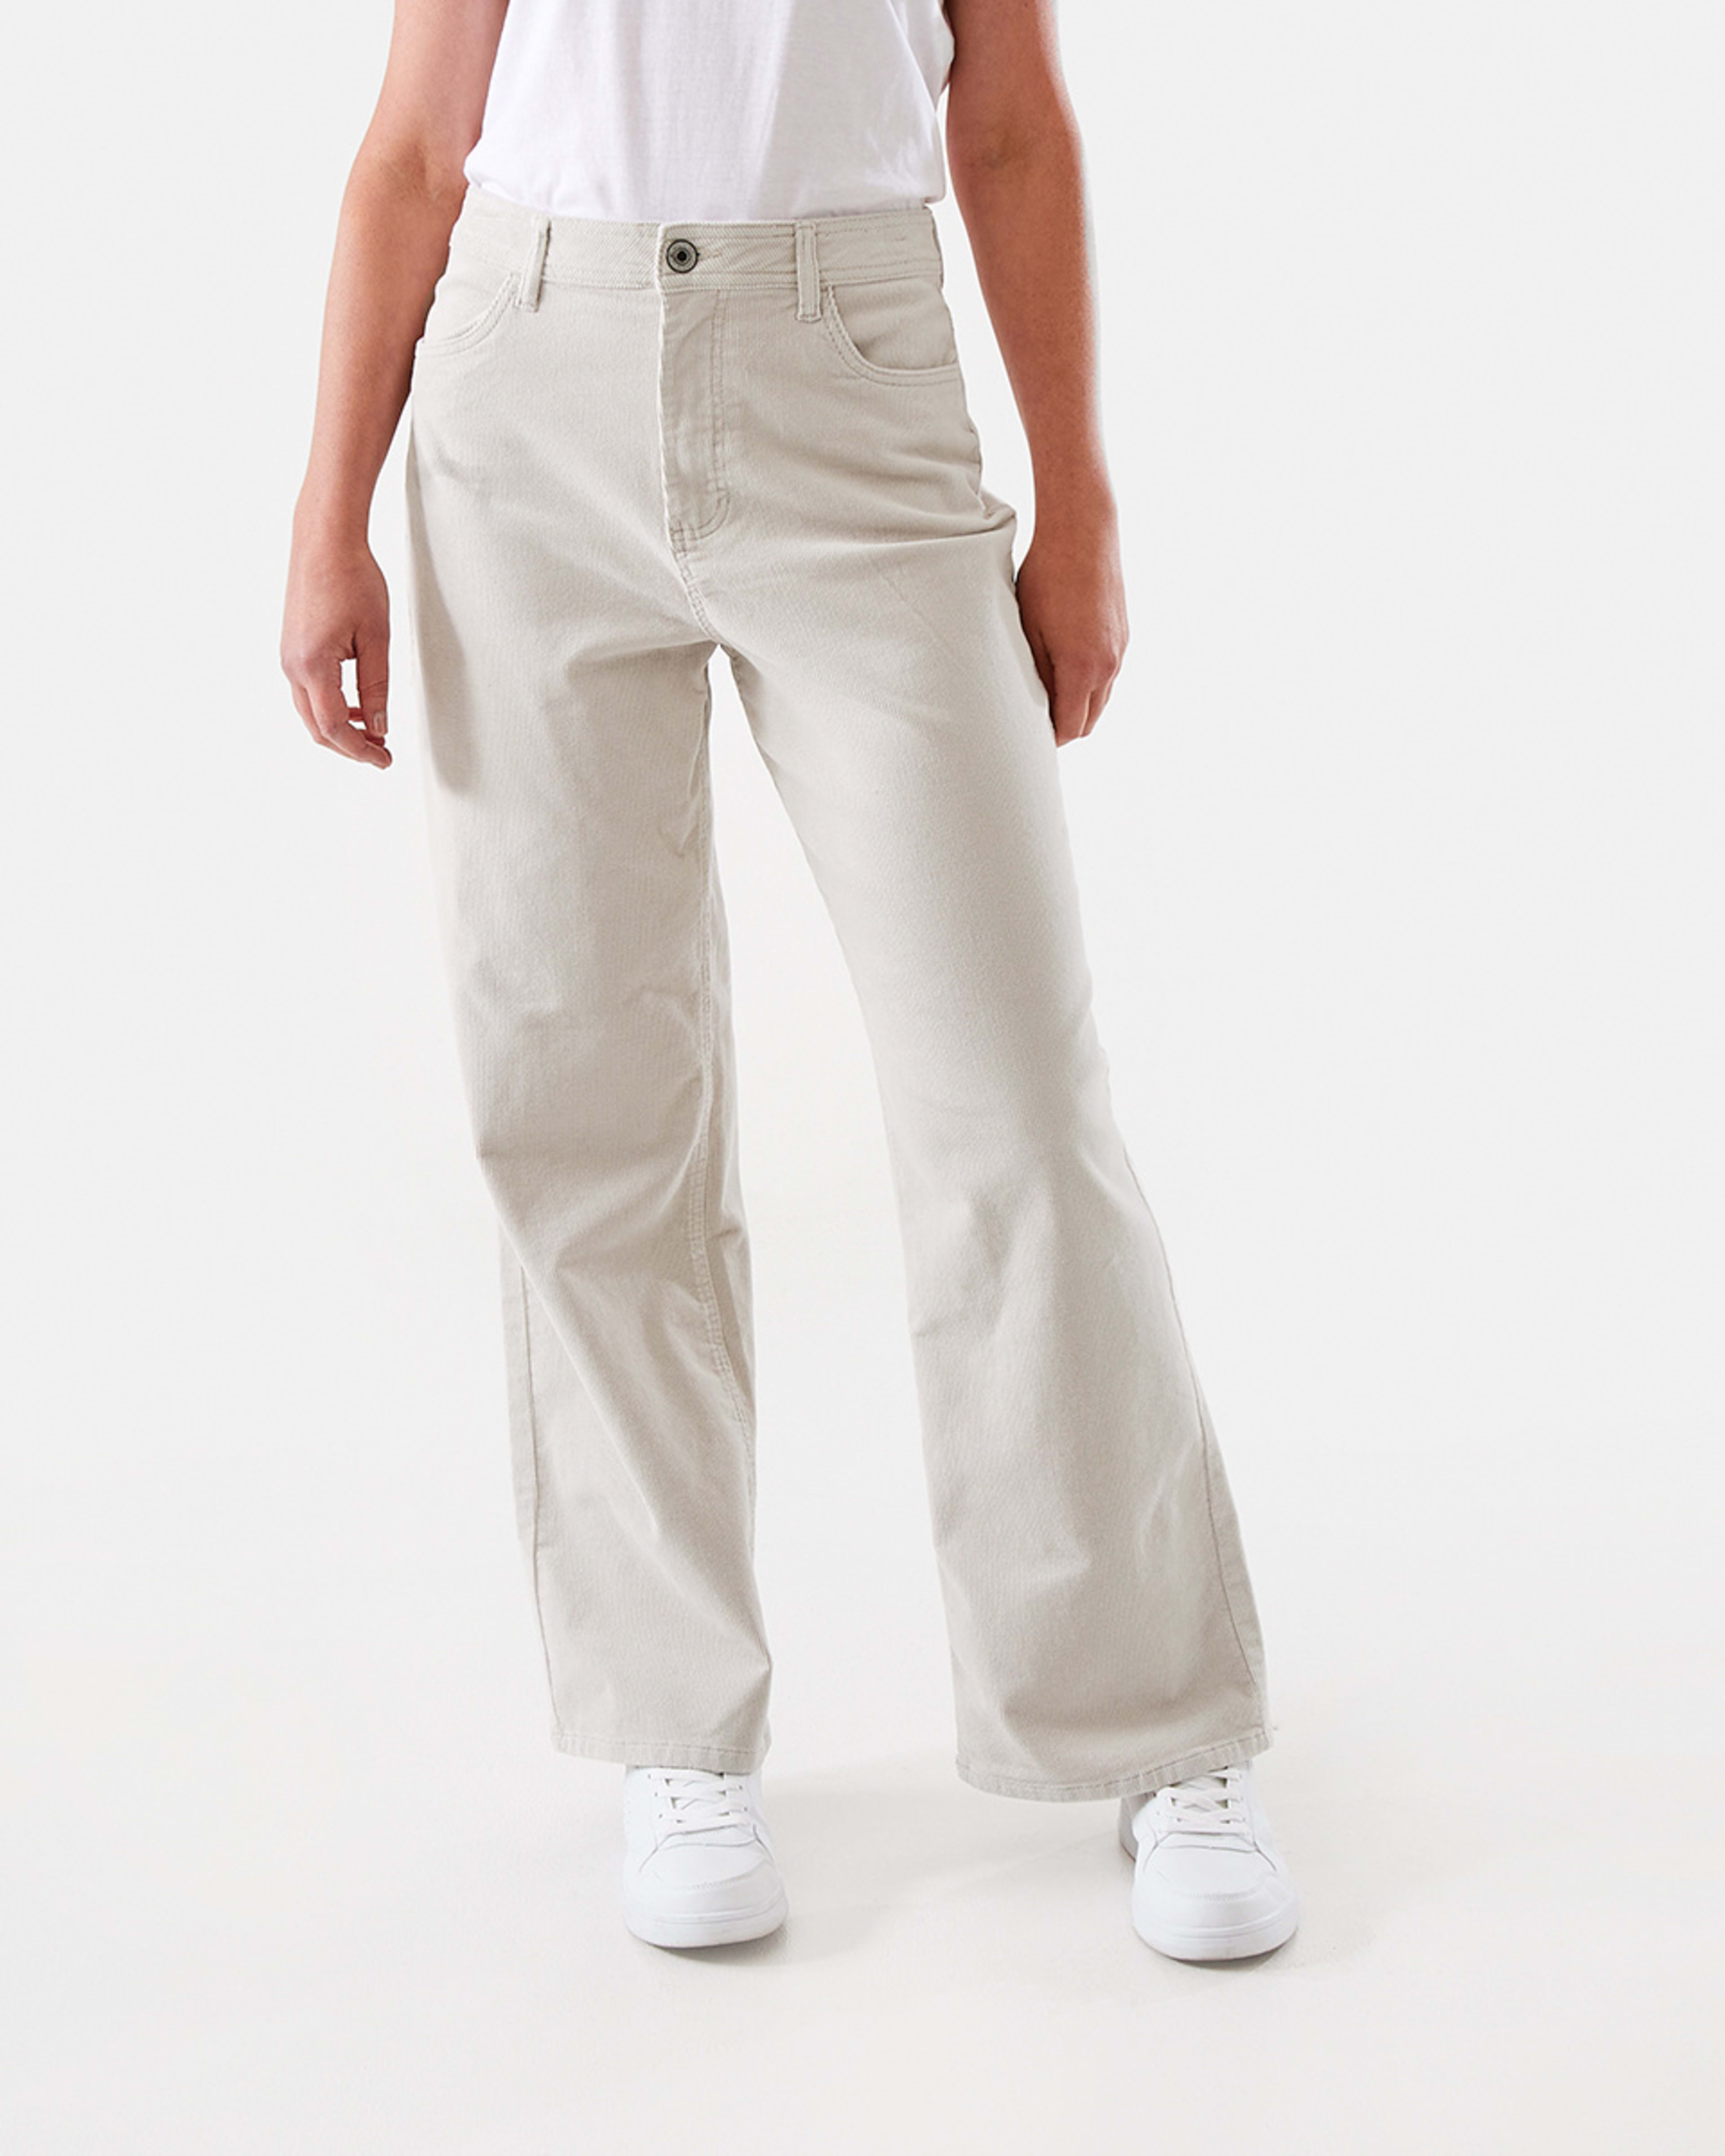 Corduroy Full Length Pants - Kmart